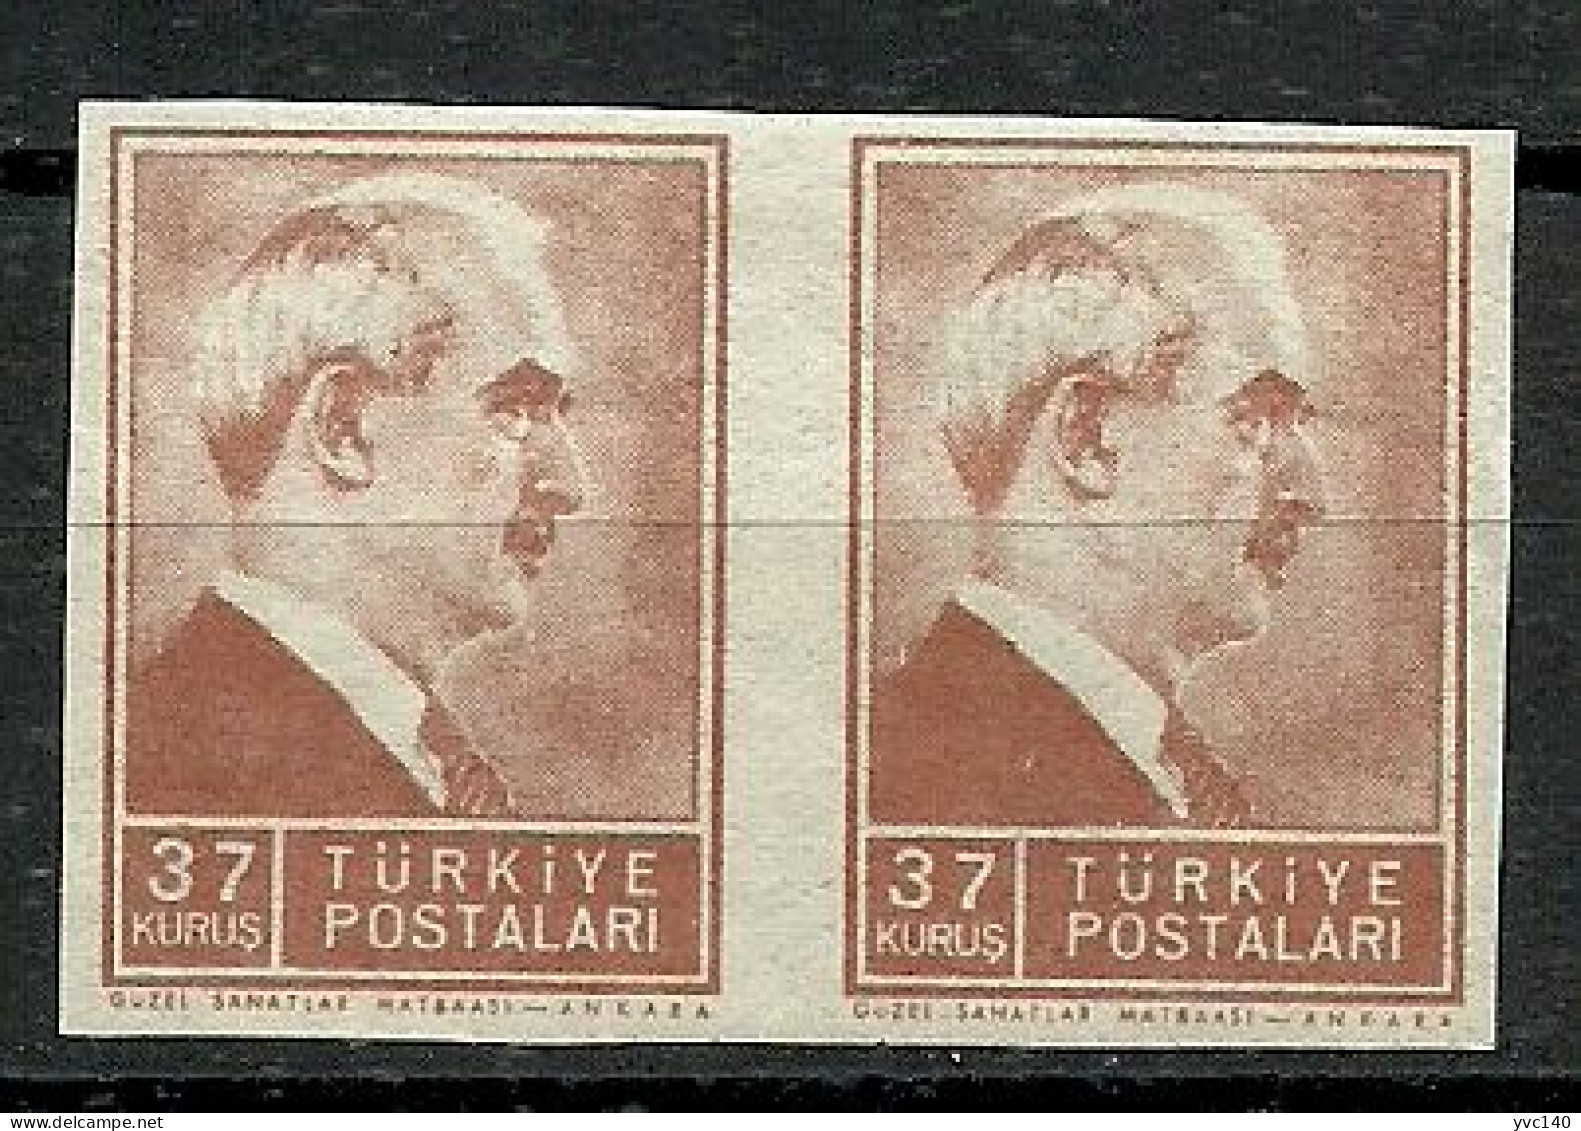 Turkey; 1942 1st Inonu Issue 37 K. ERROR "Imperf. Pair" - Unused Stamps